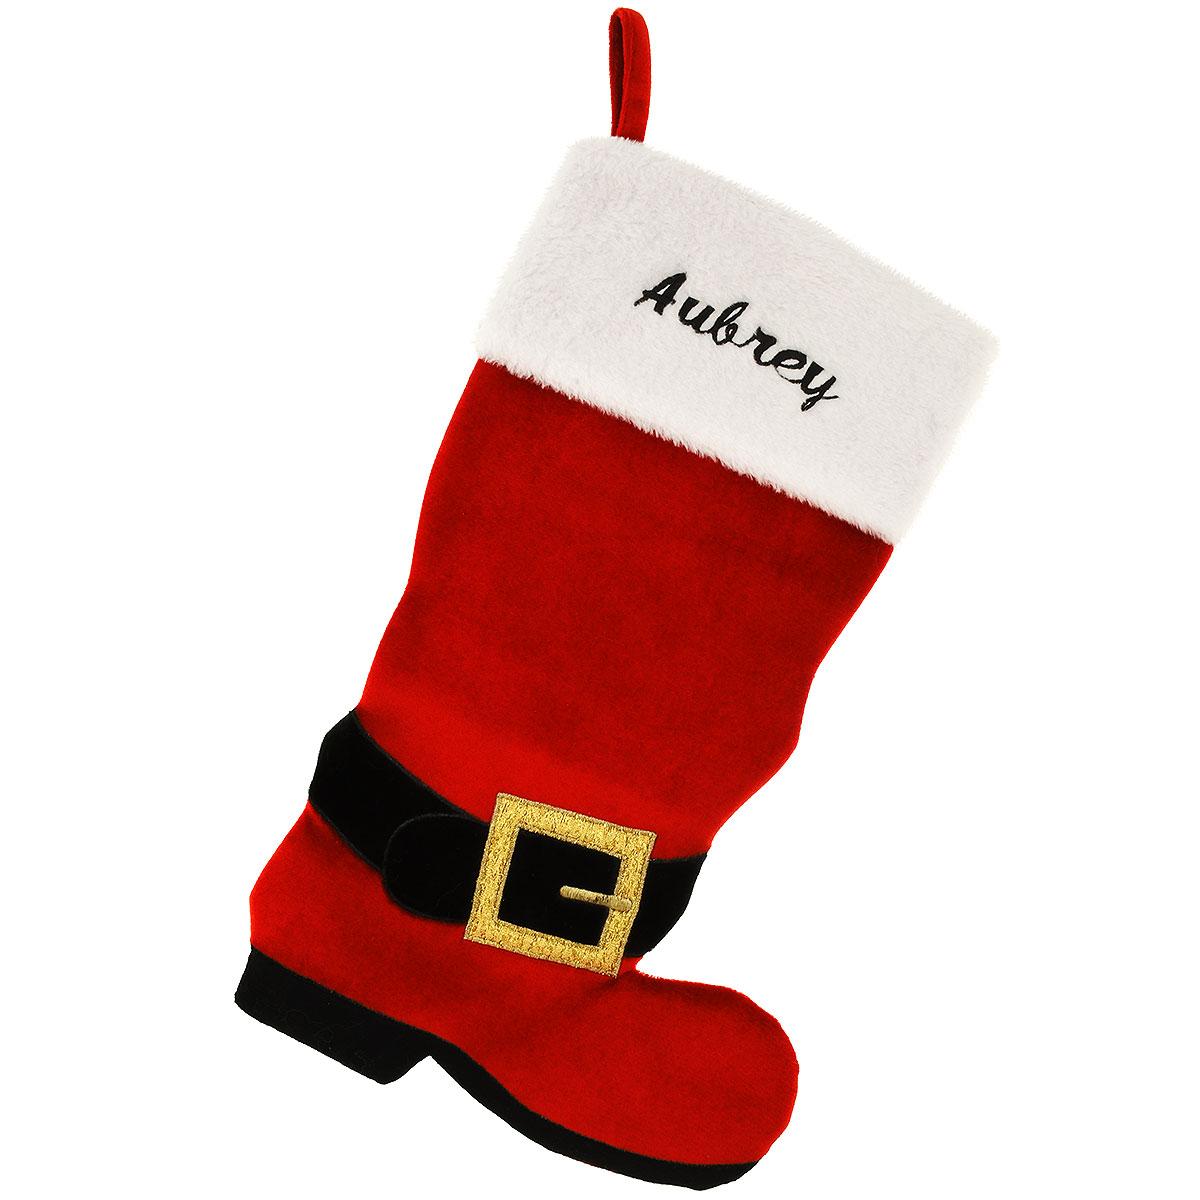 19" Personalize Santa Boot Stocking